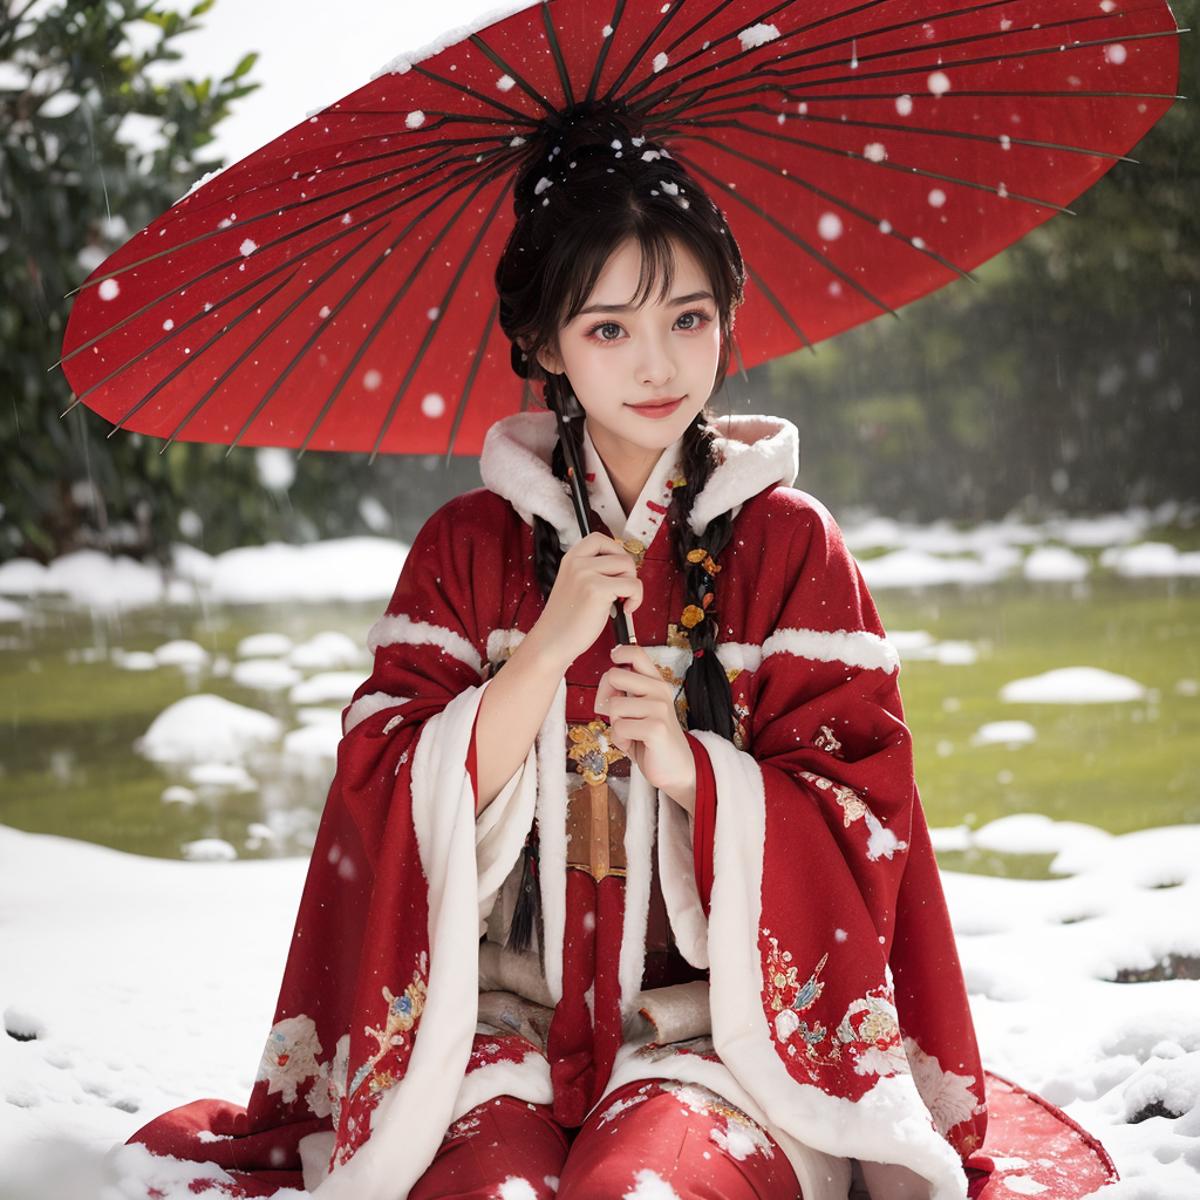 Winter Hanfu - Clothing LoRA image by buzimage